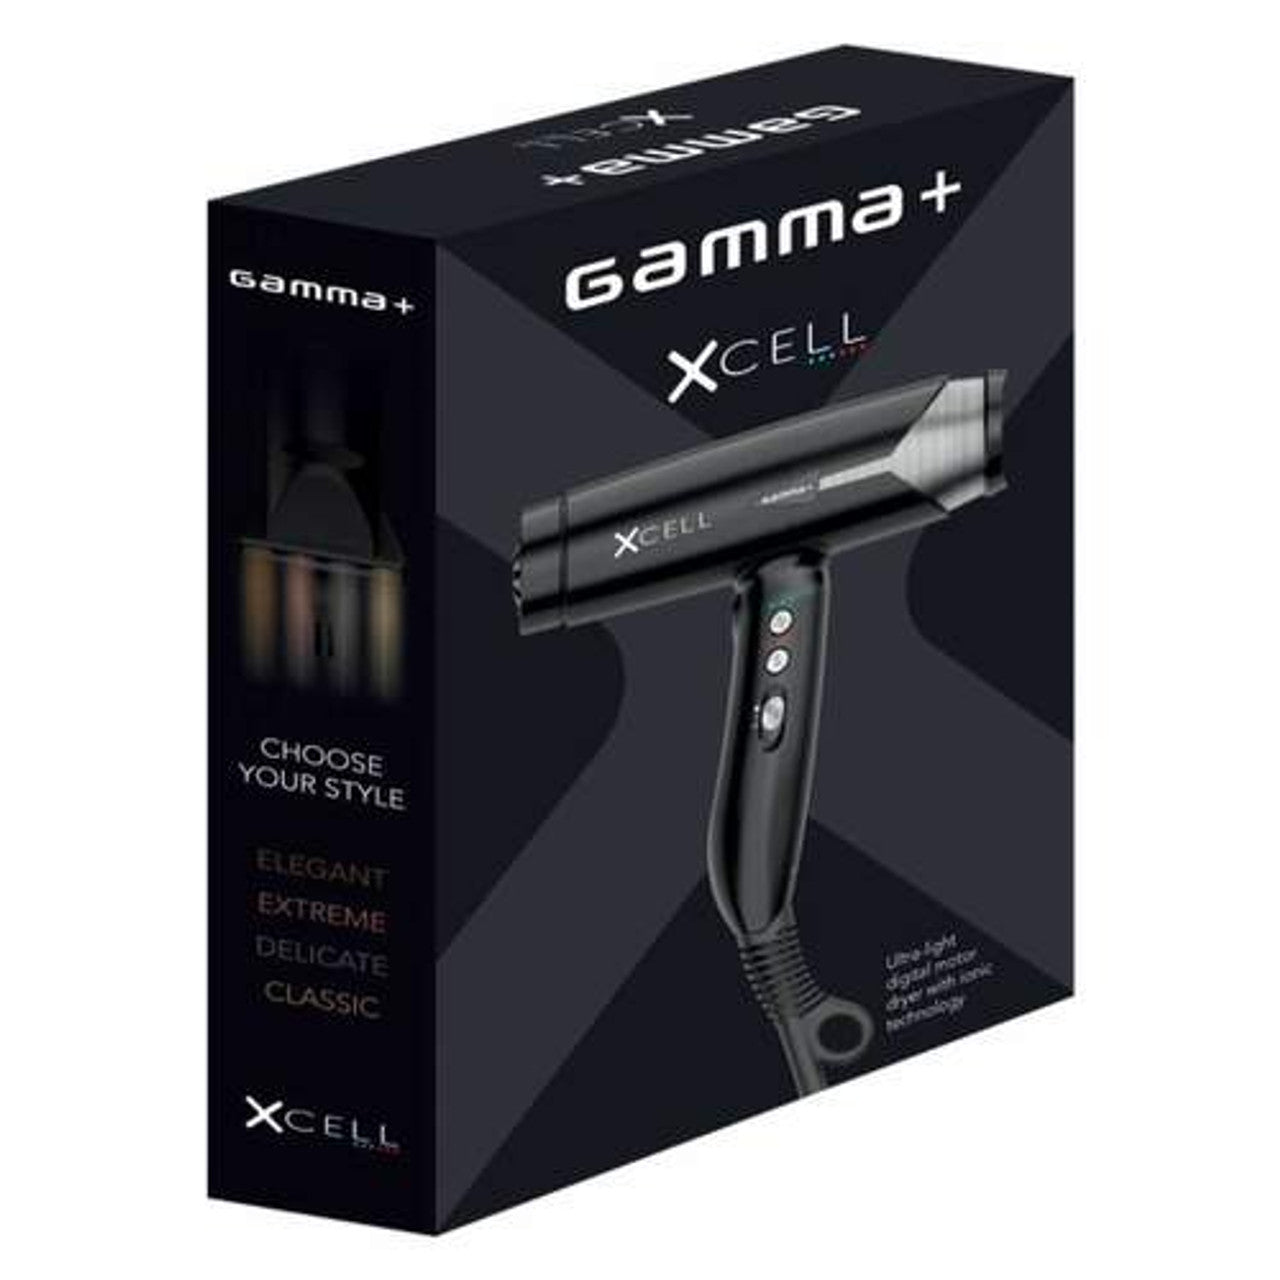 Gamma+ X-Cell Hair Dryer